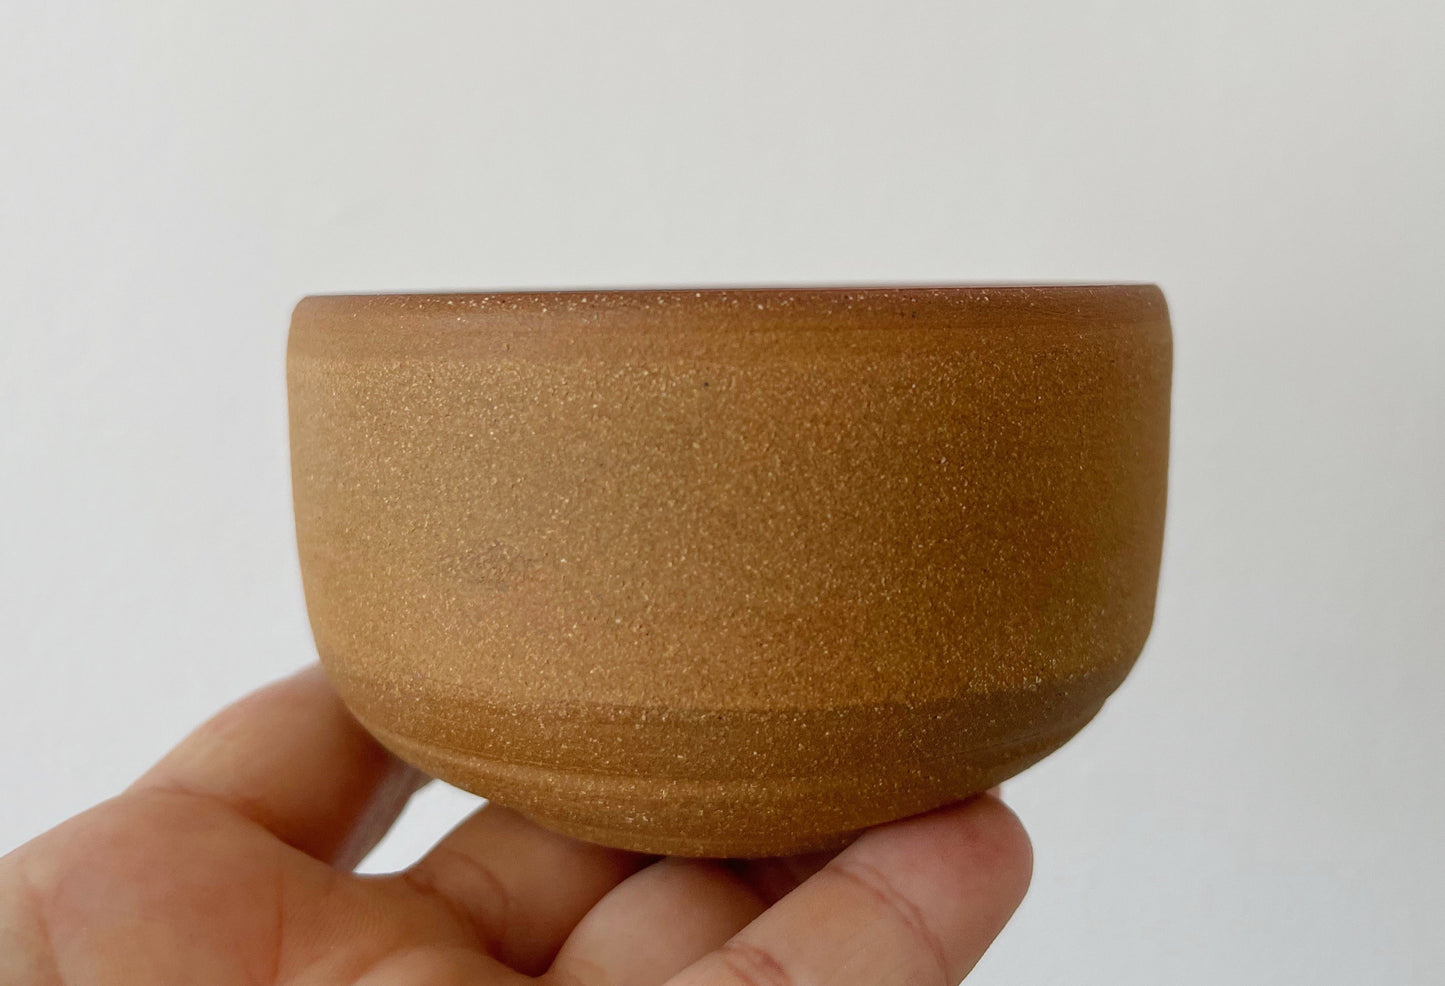 Terracotta & Red Studio Pottery Bowl